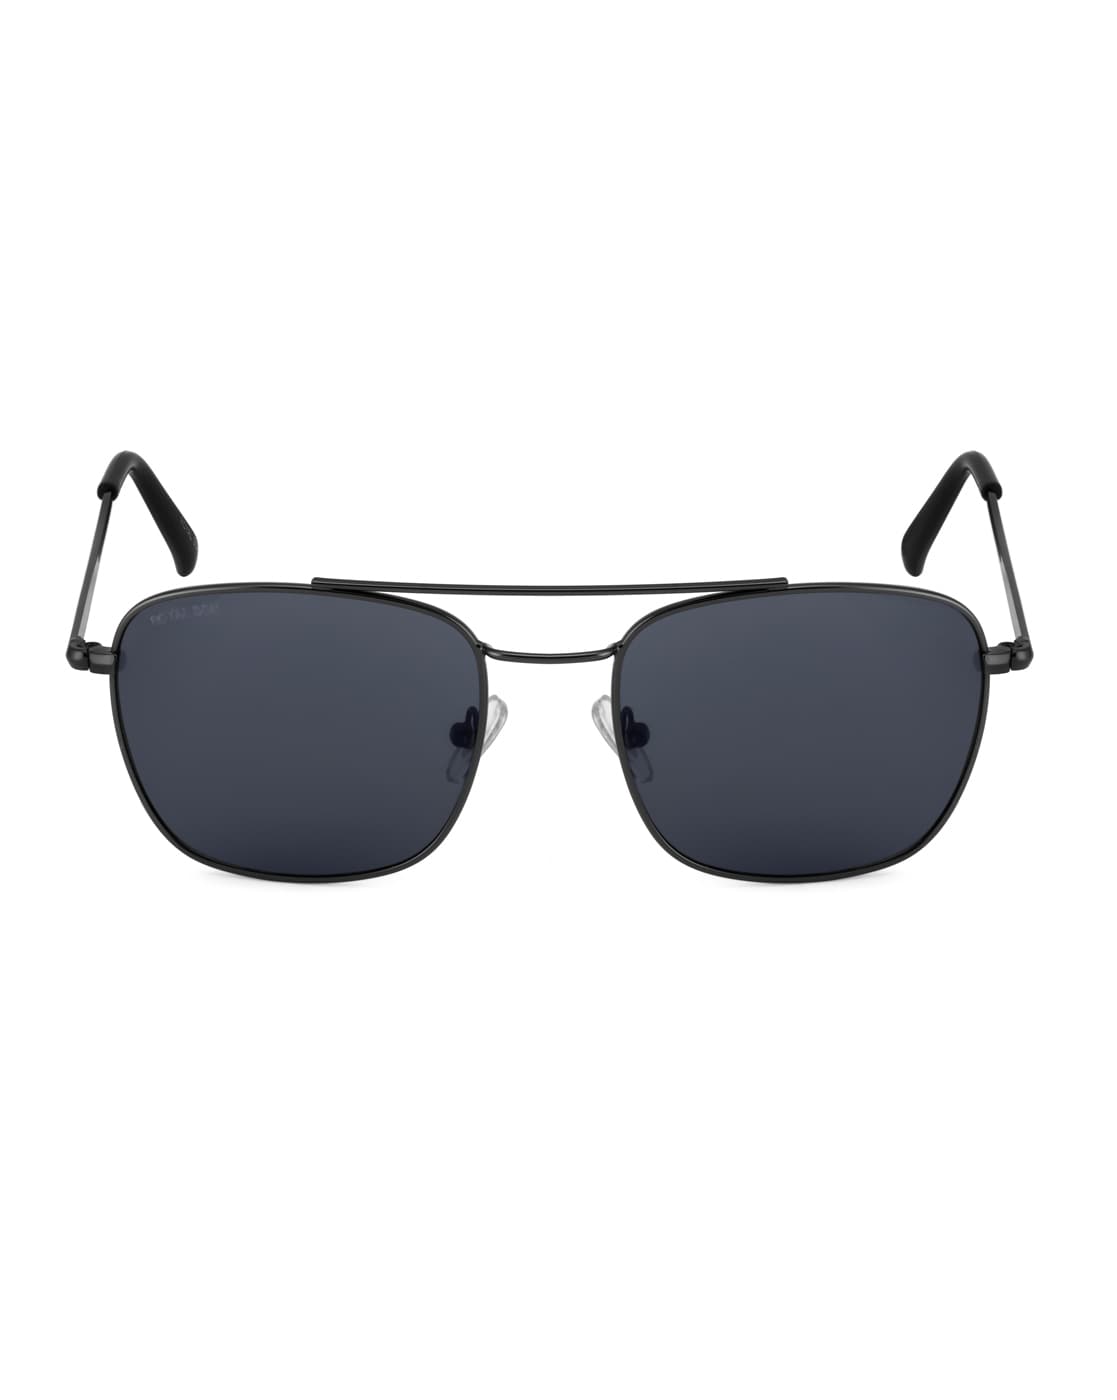 Buy Black Smoke Sunglasses for Men by ROYAL SON Online